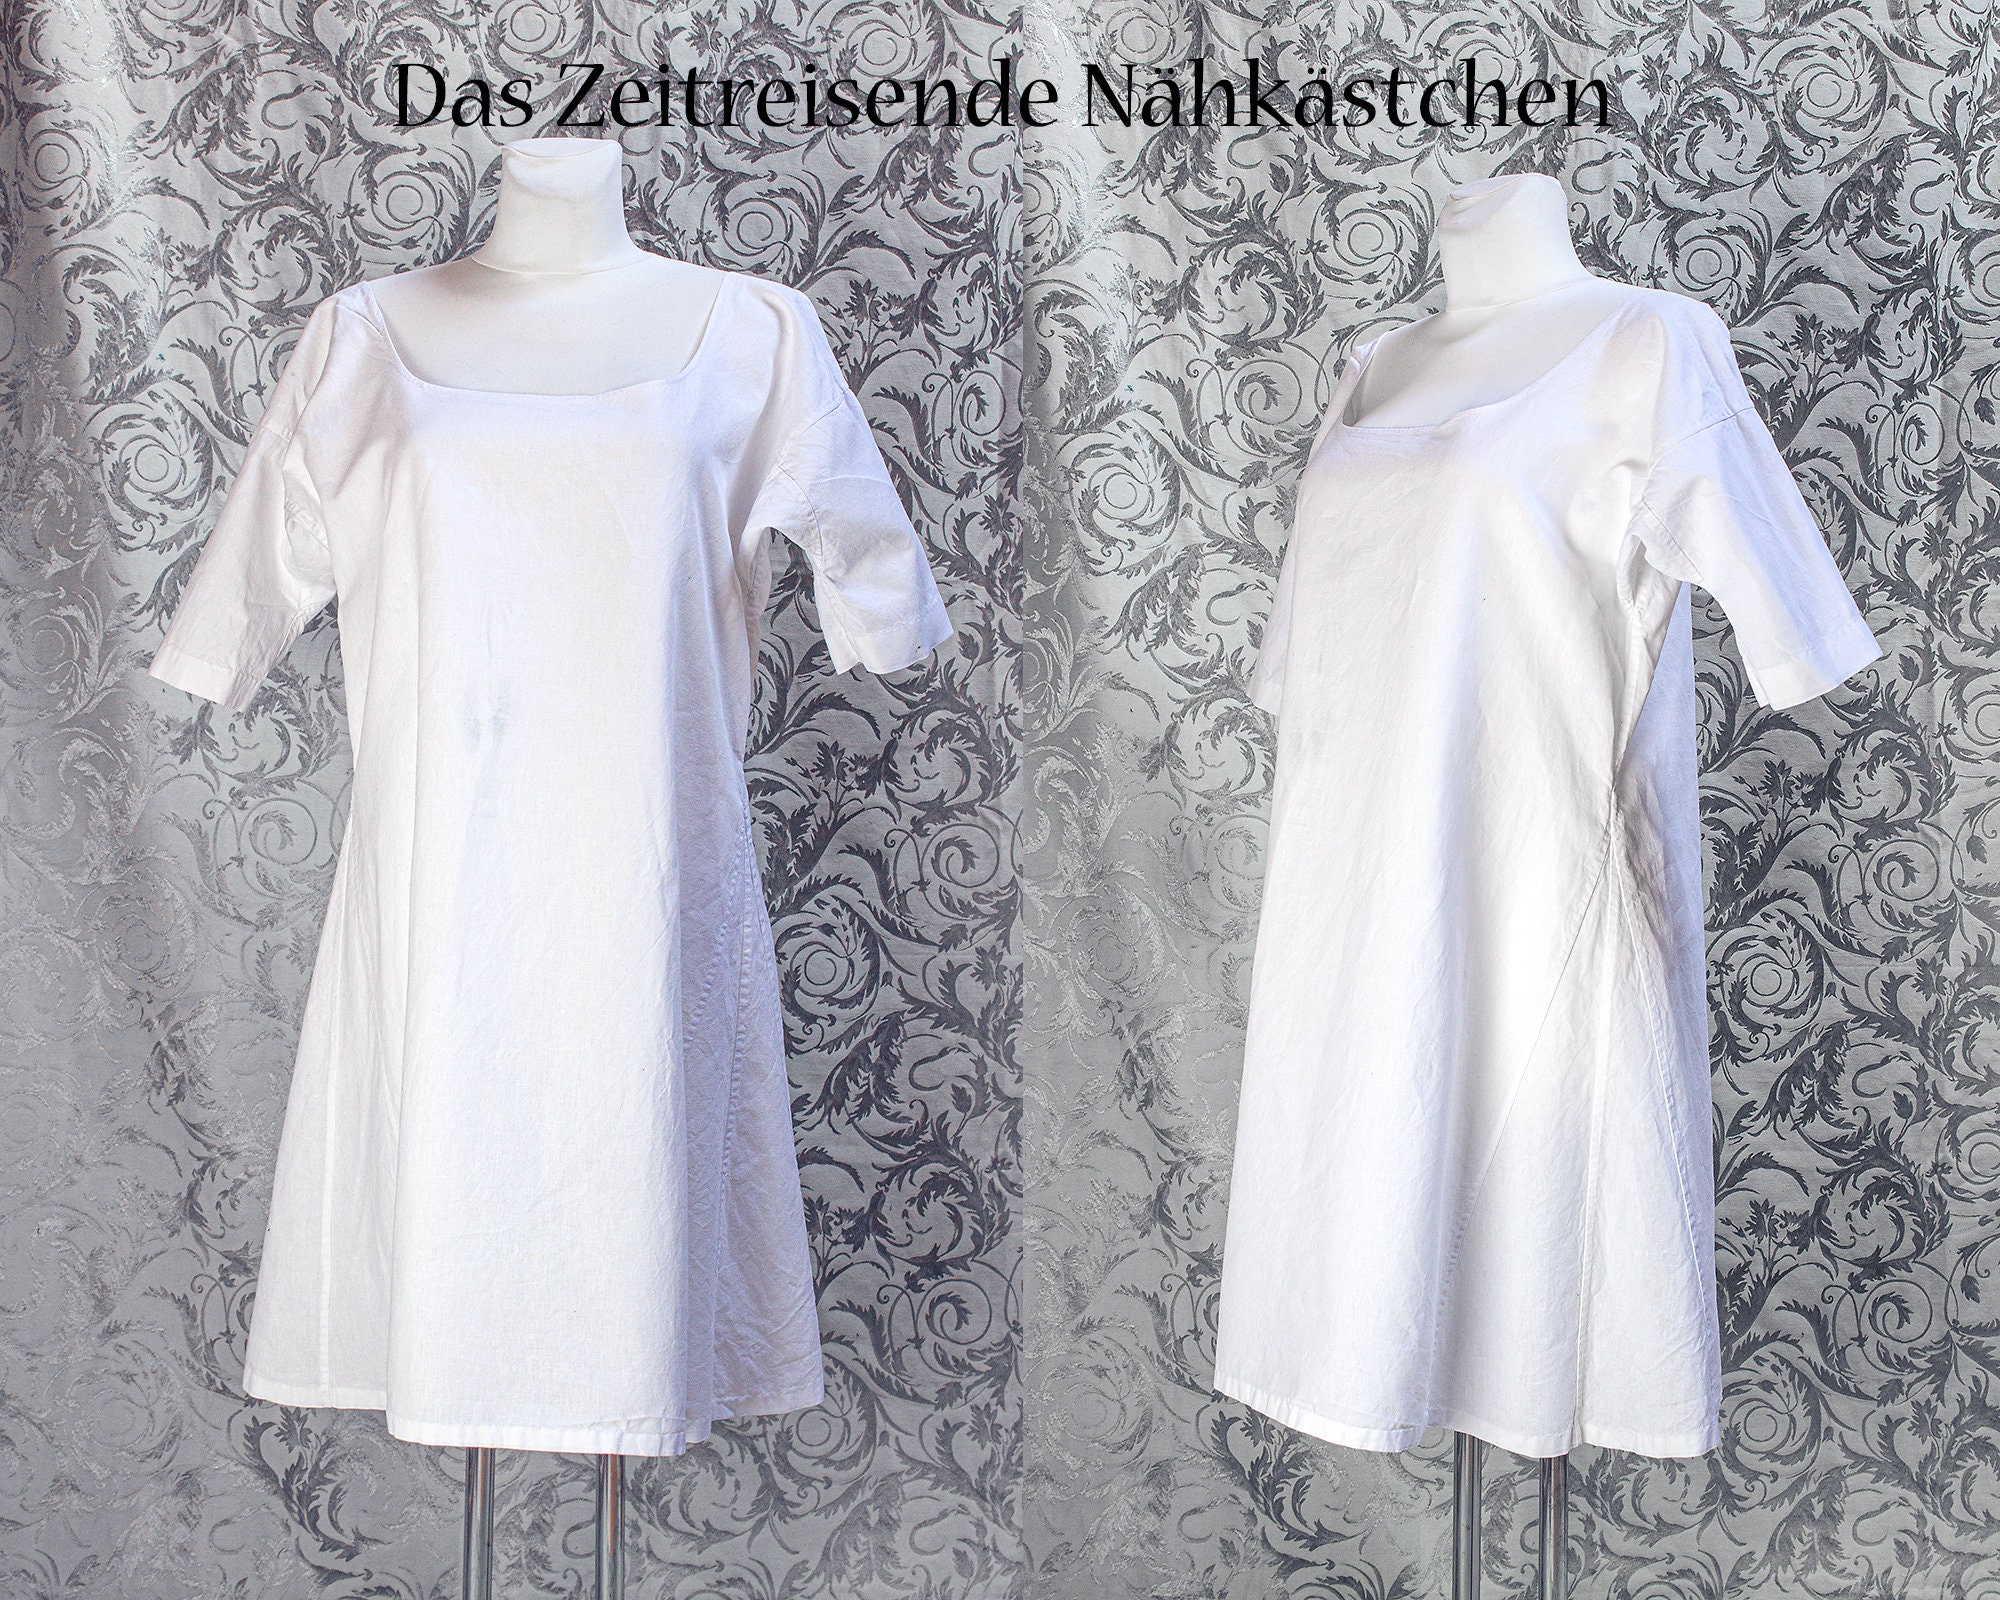 Kleid aus dem 18 jahrhundert - .de